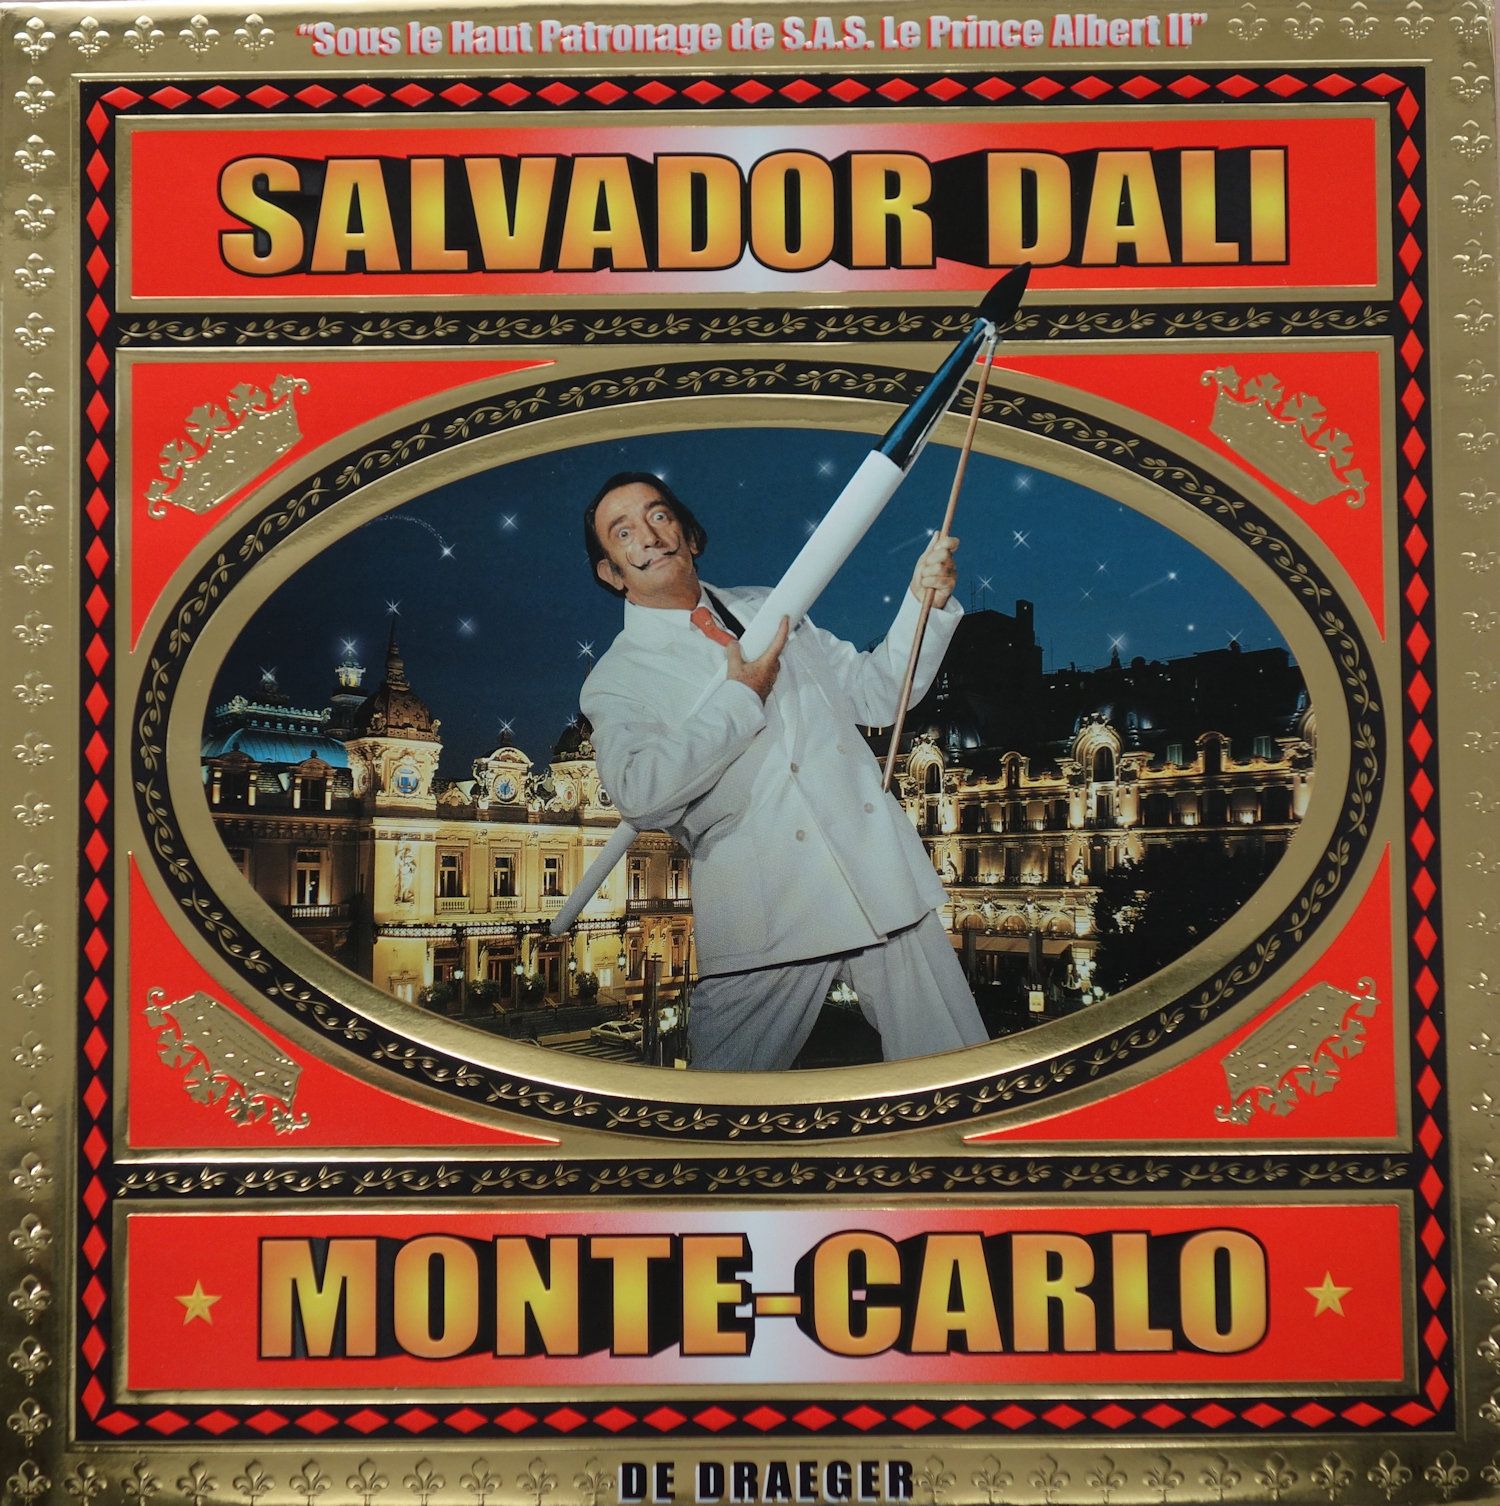 Salvador DALI Salvador Dali

Das Album / Monte-Carlo von Draeger

Dräger Ausgabe&hellip;